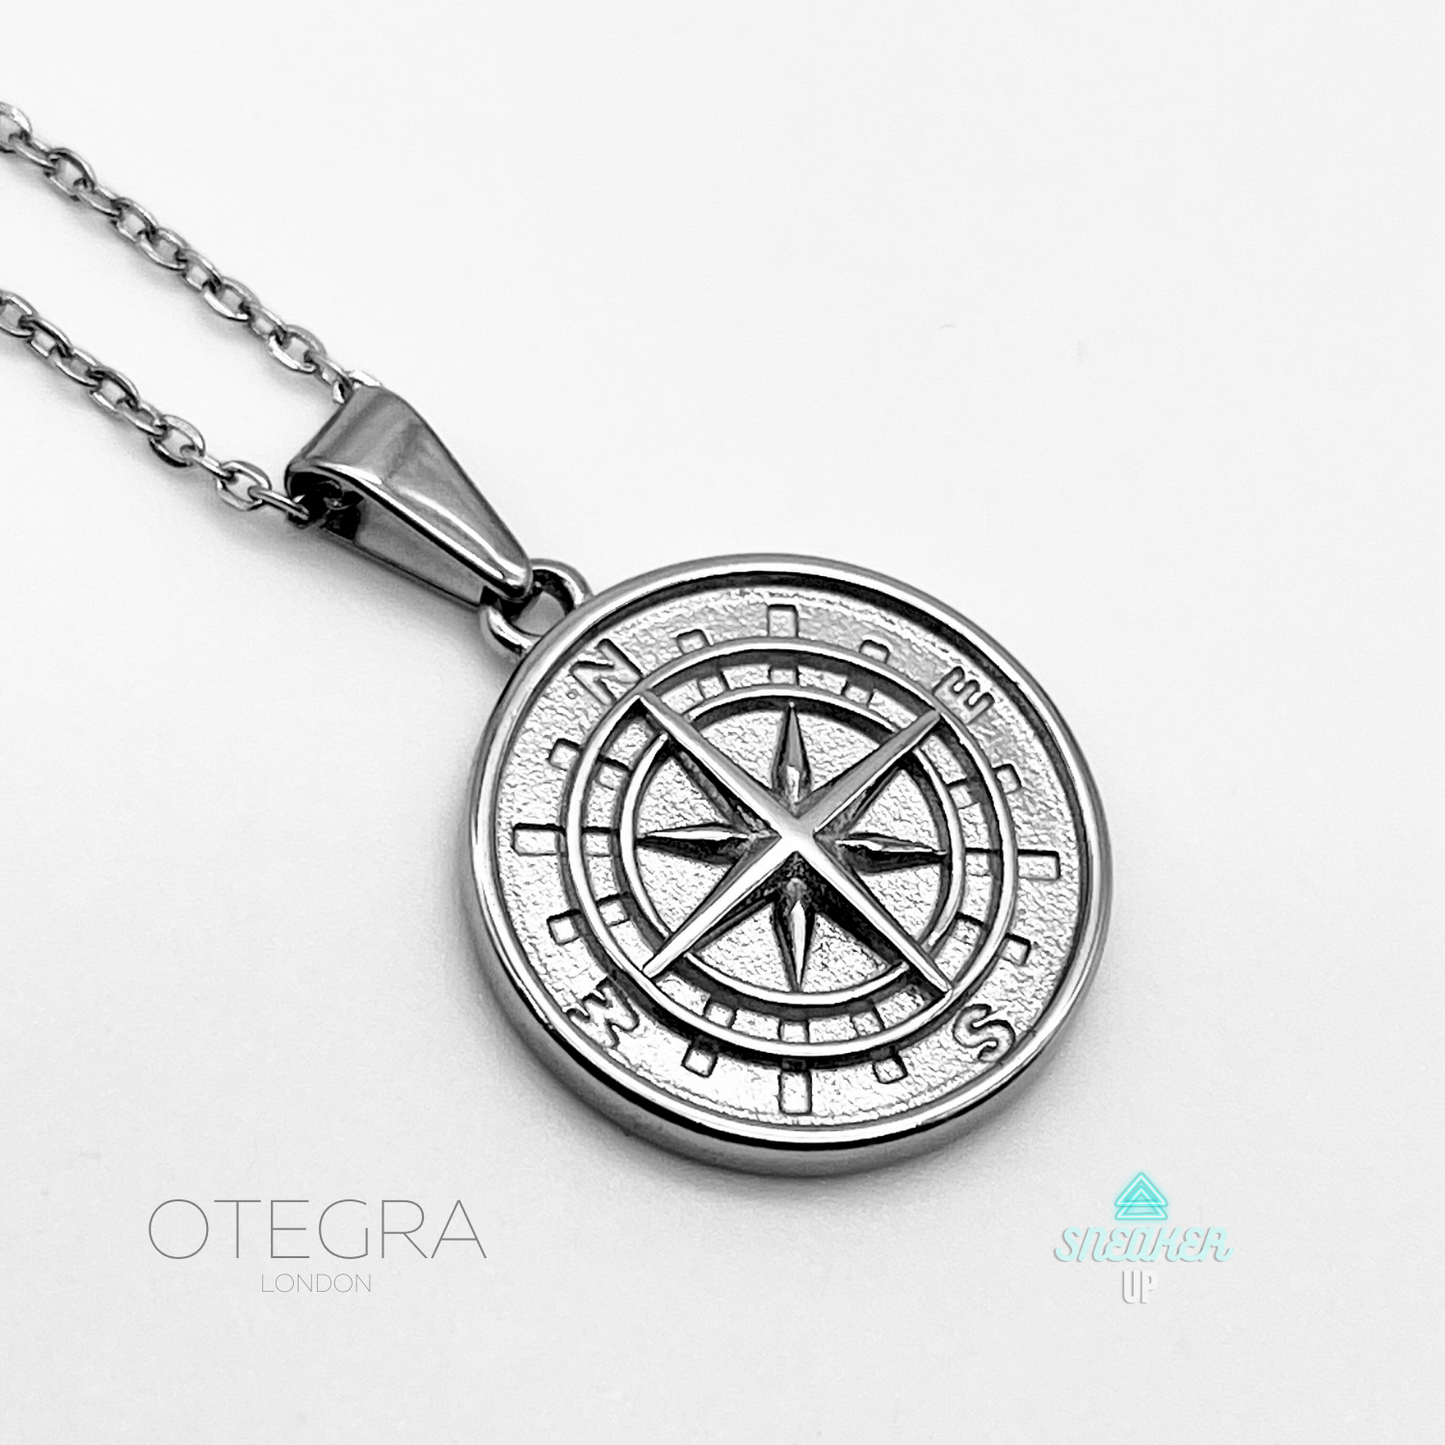 OTEGRA London Silver Compass Pendant Necklace